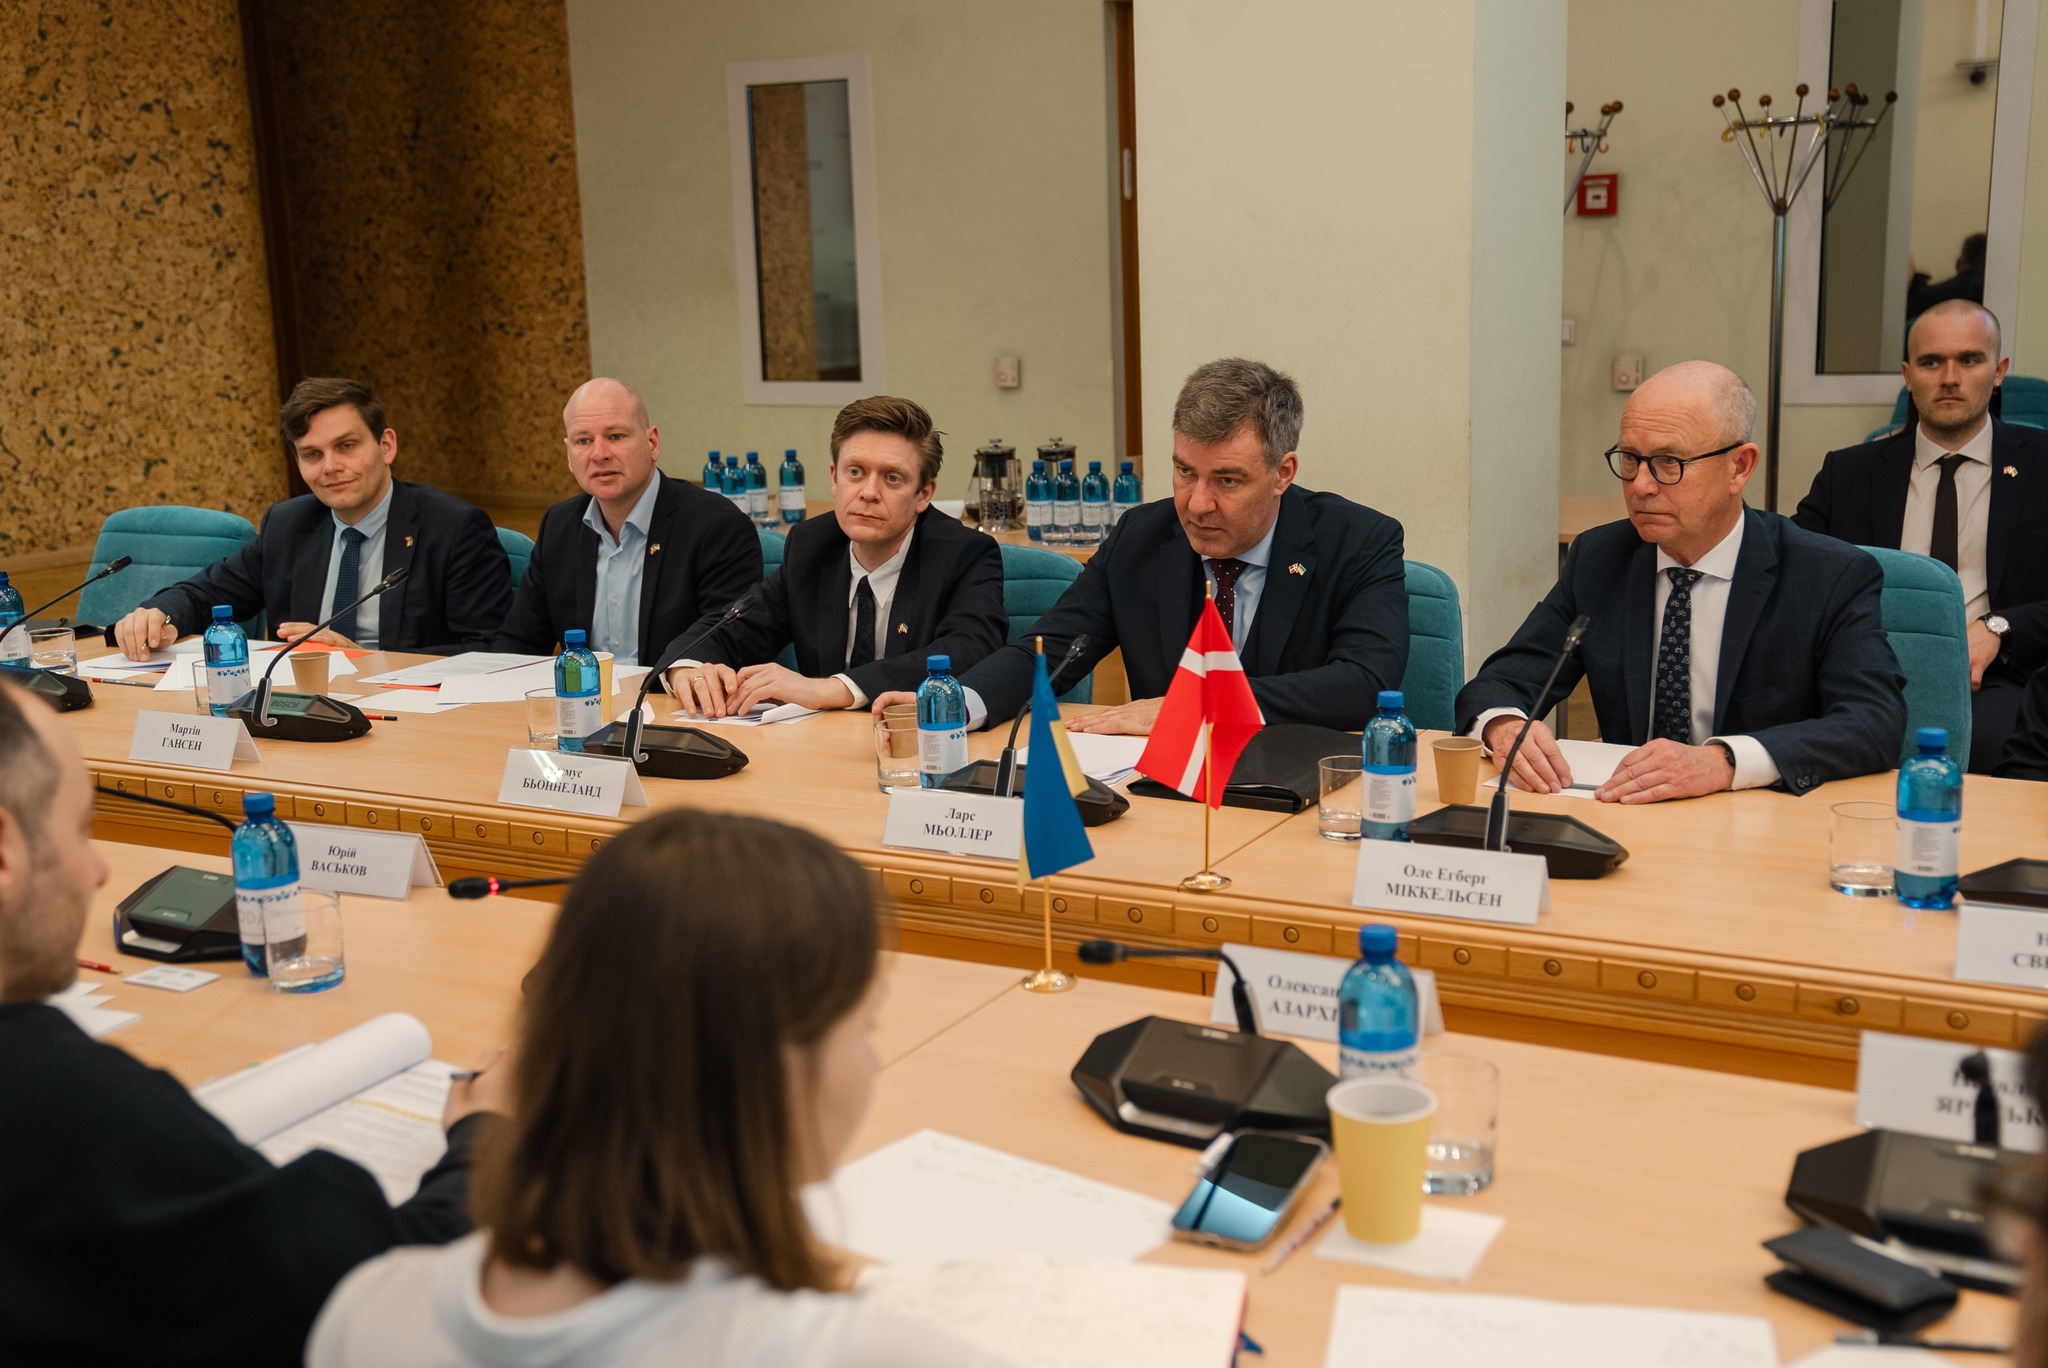 Denmark will enhance the development of energy efficiency in Ukraine through educational and scientific programmes